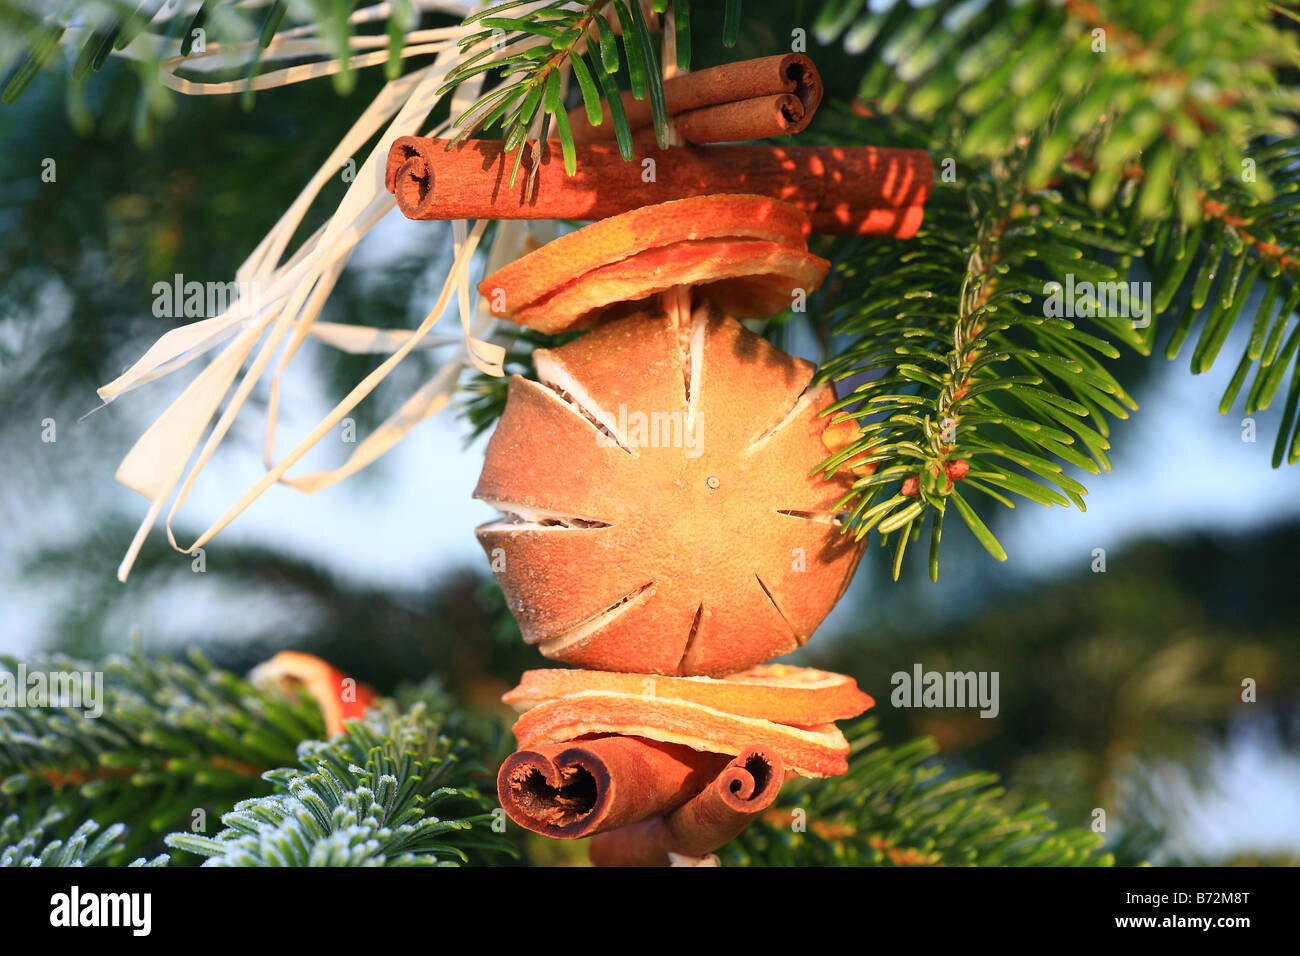 Christmas tree decoration Stock Photo